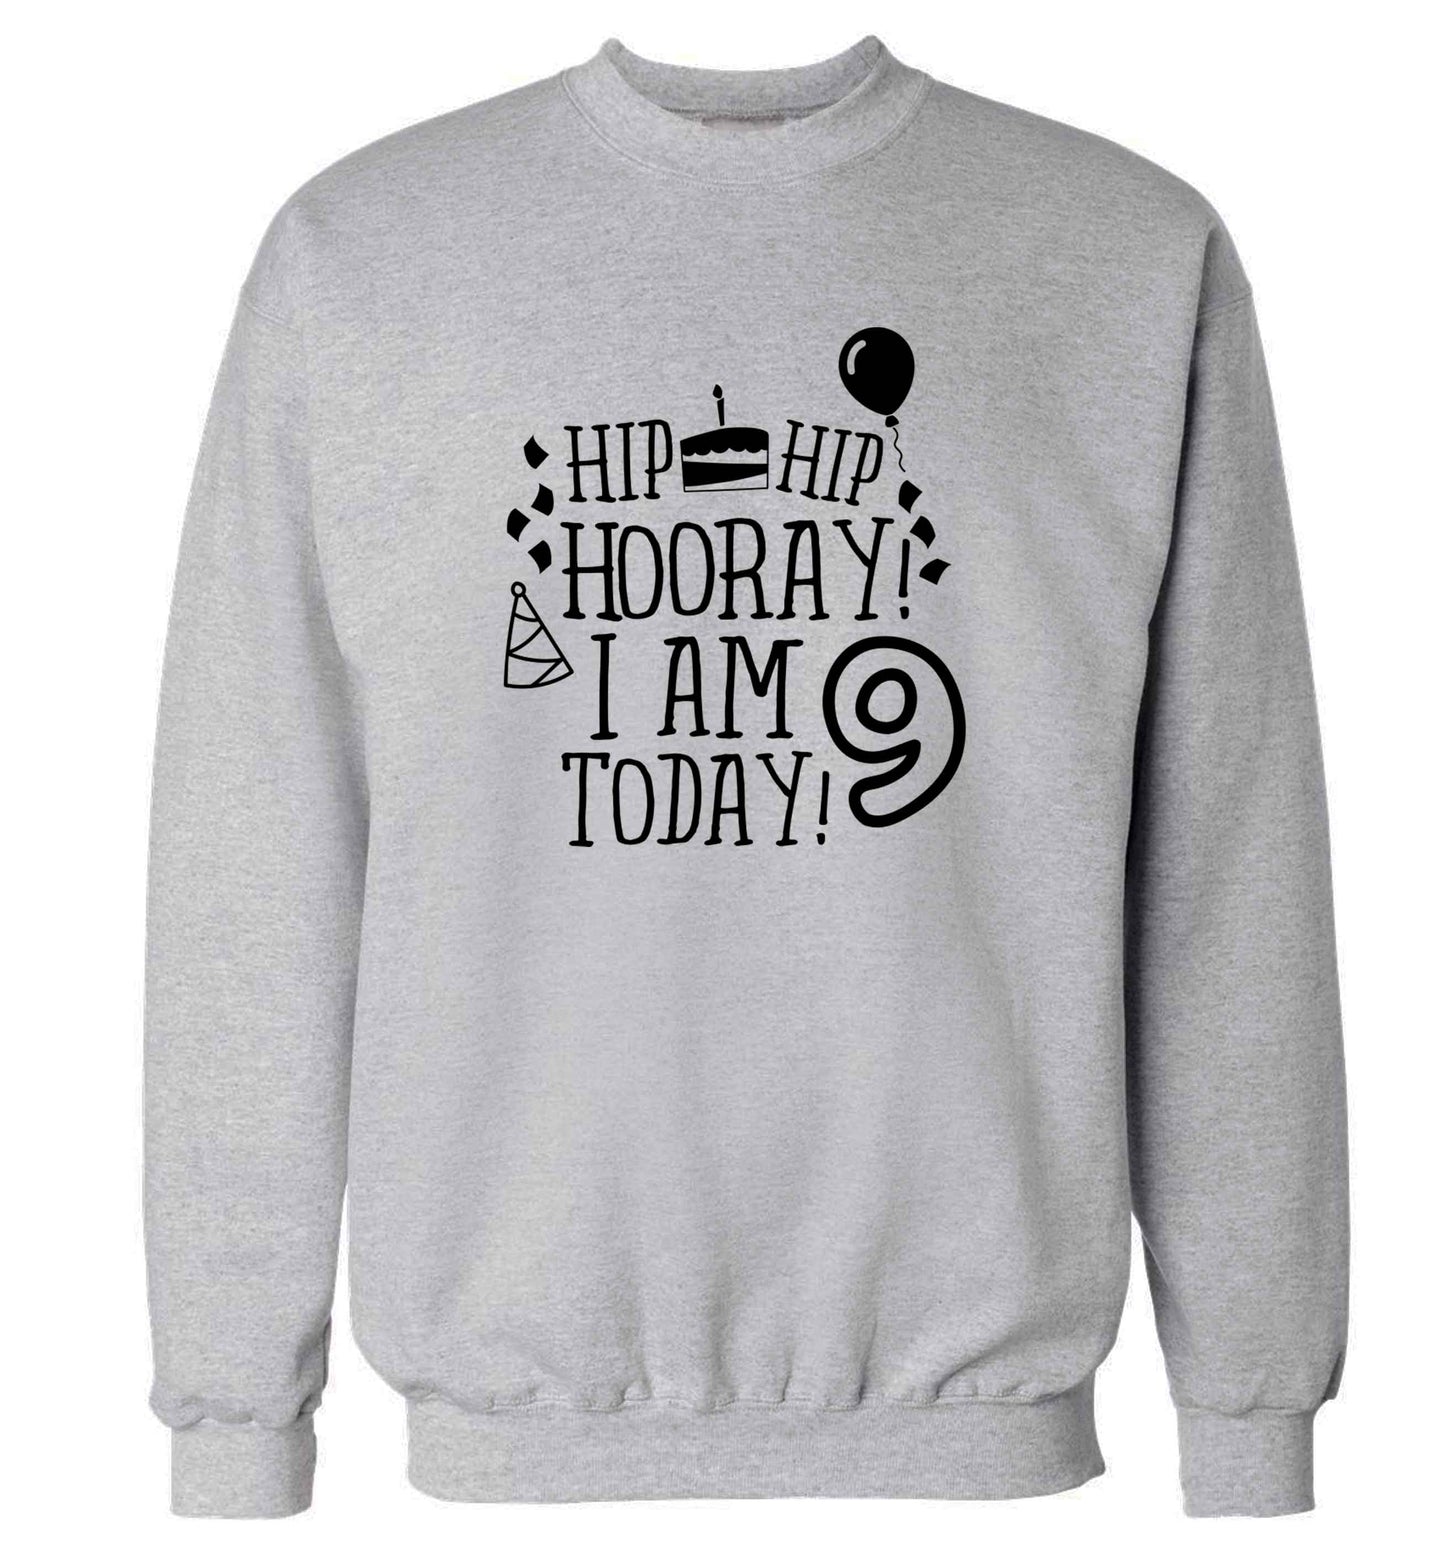 Hip hip hooray I am 9 today! adult's unisex grey sweater 2XL